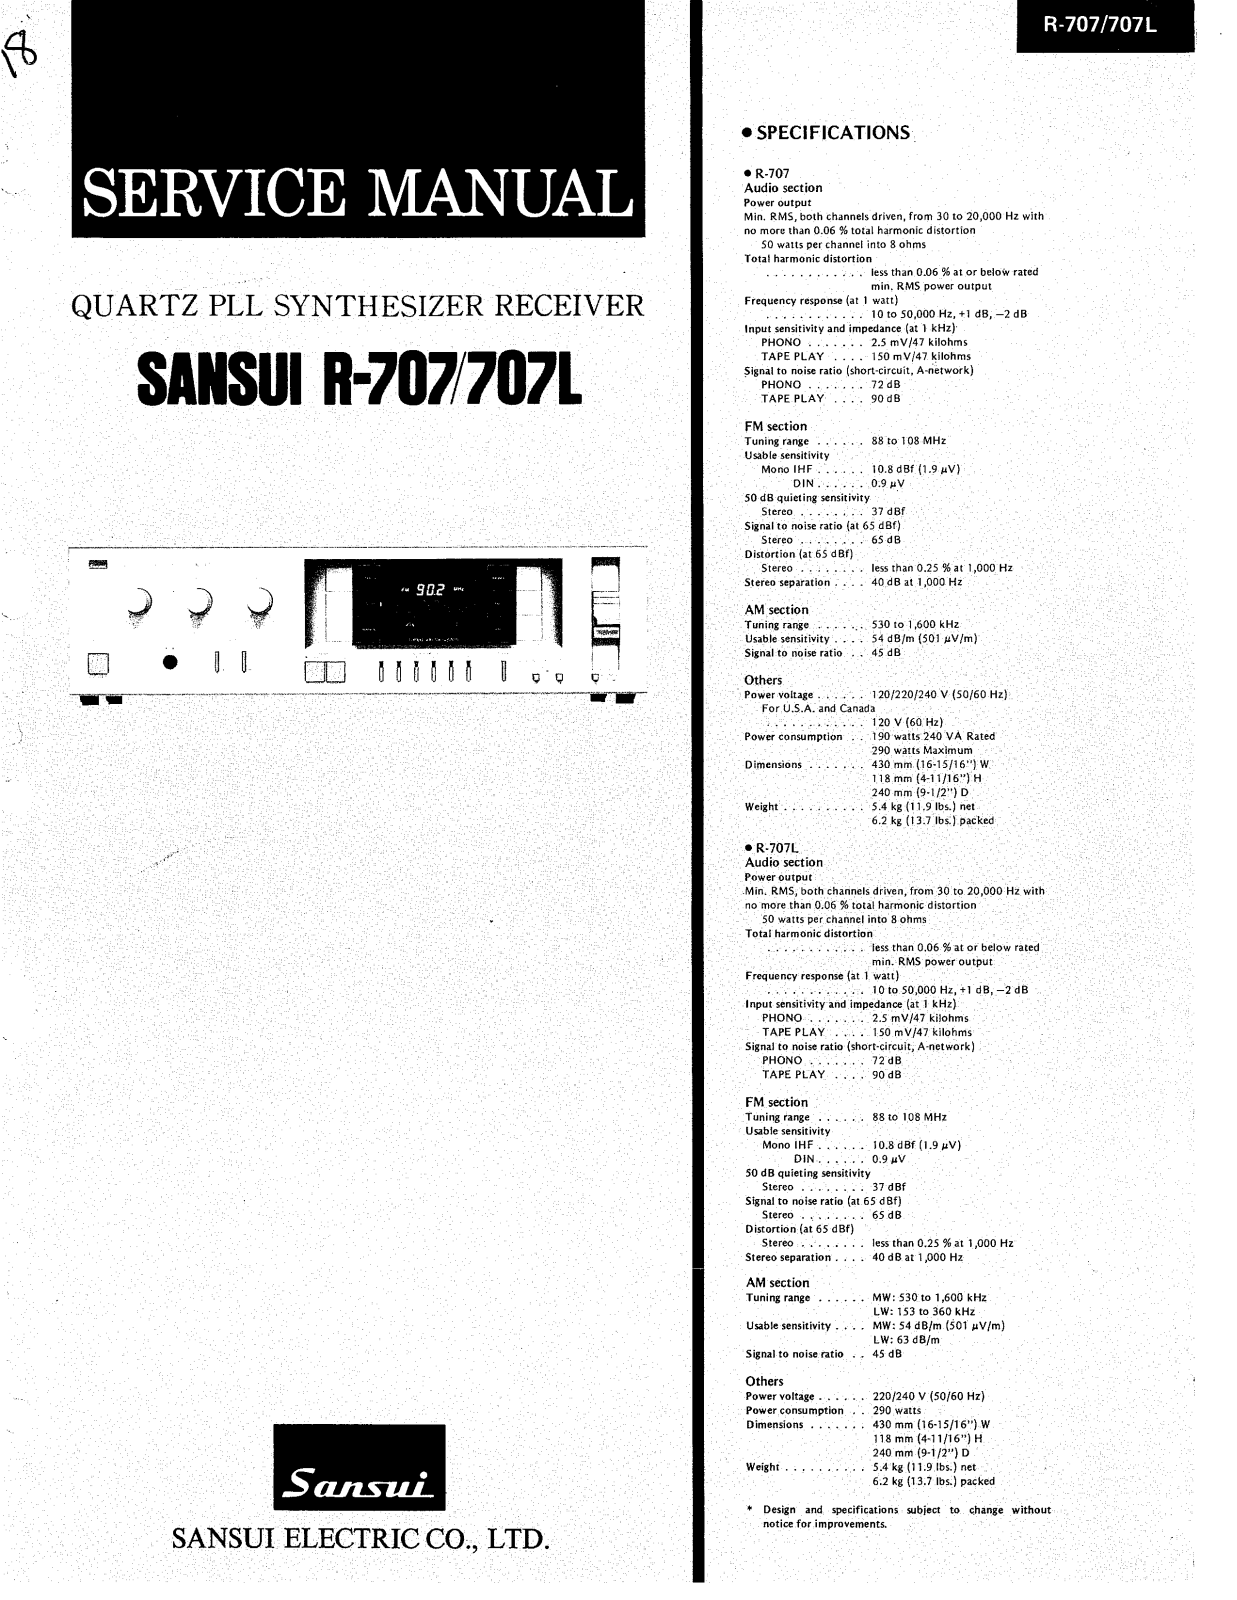 Sansui R-707 Service Manual